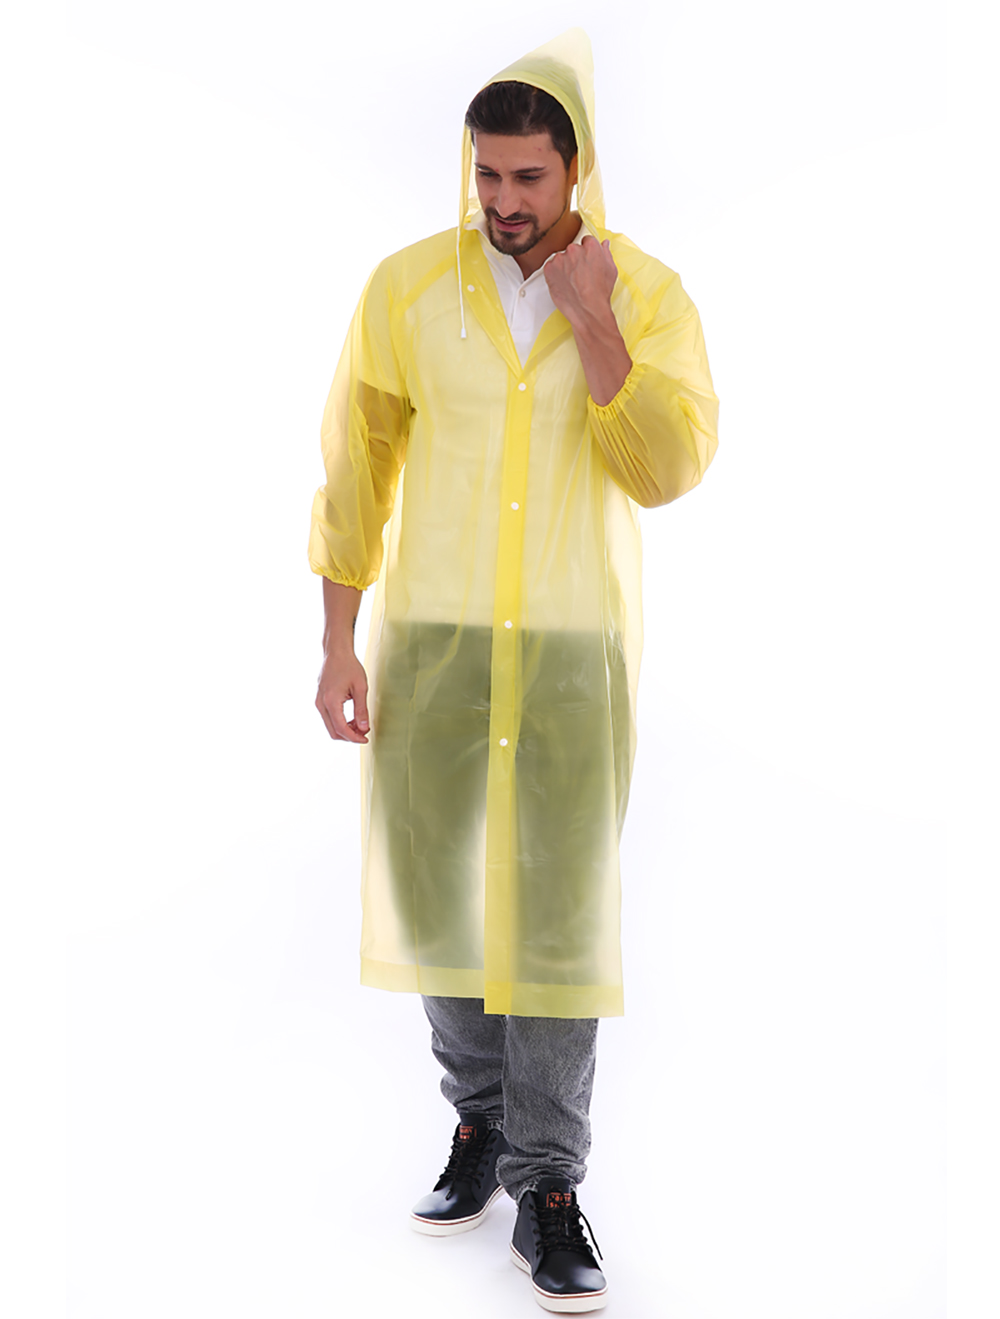 Adult lightweight PEVA raincoat with elastic sleeves and drawstring hoods